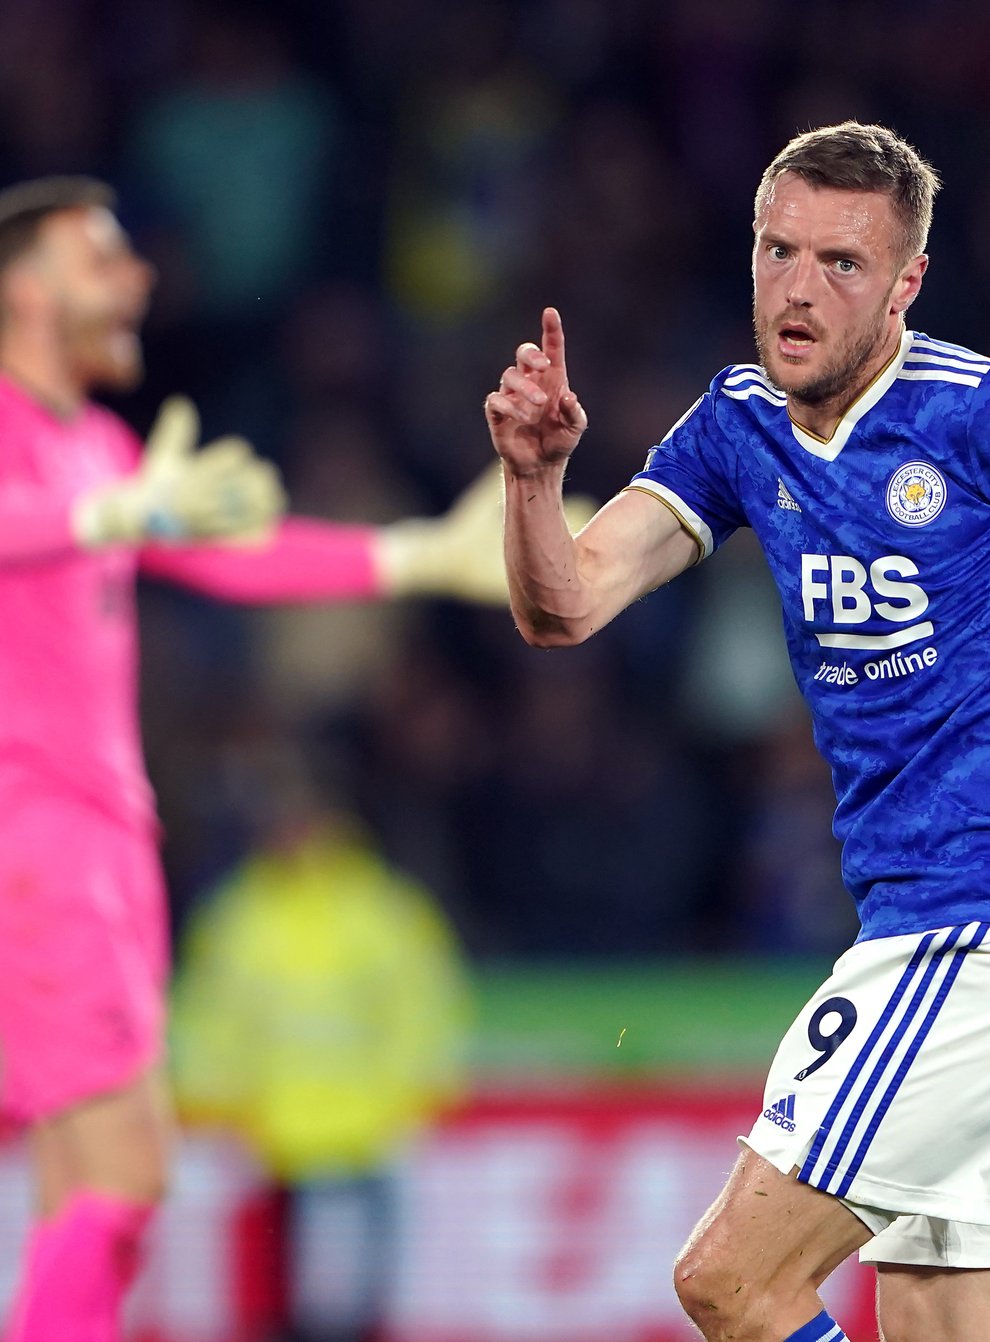 Leicester striker Jamie Vardy hit a second-half brace to help sink relegated Norwich (Zac Goodwin/PA)